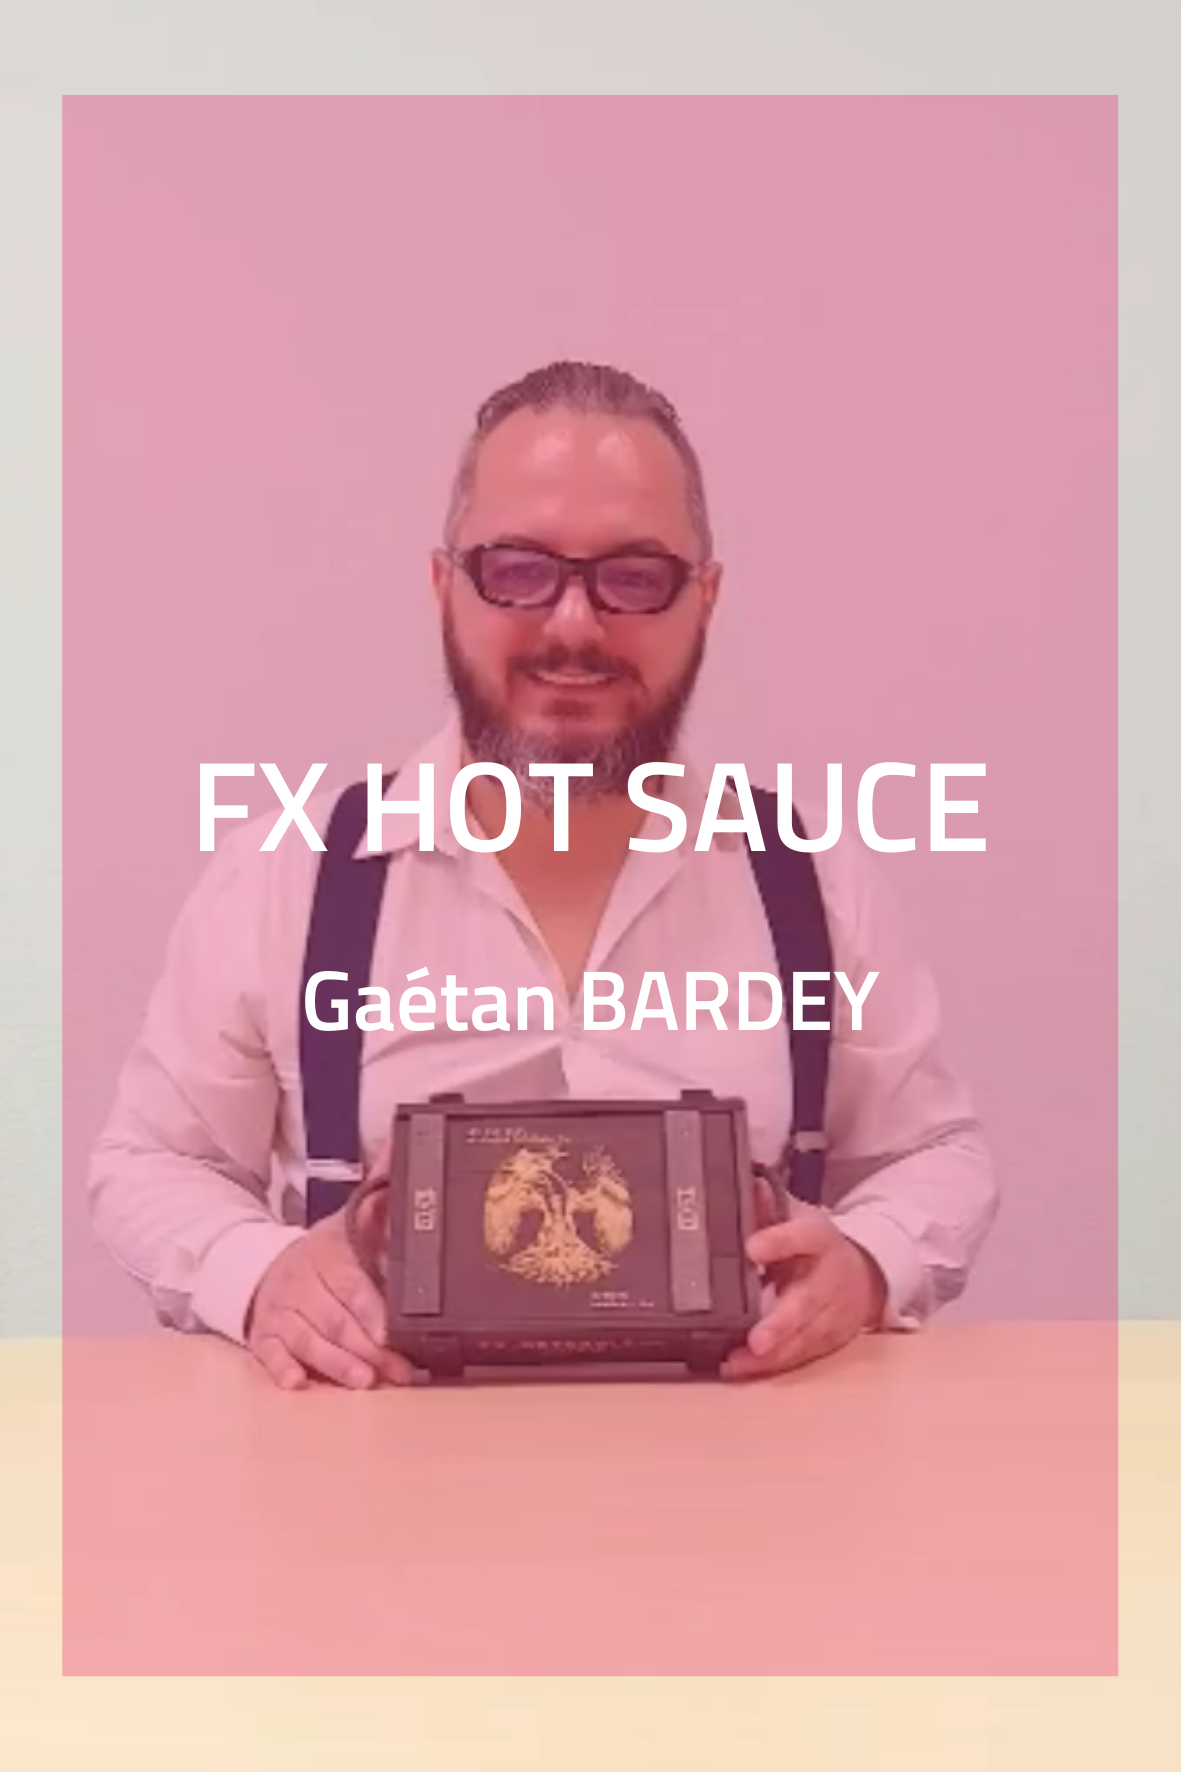 FX_hot_sauce.png